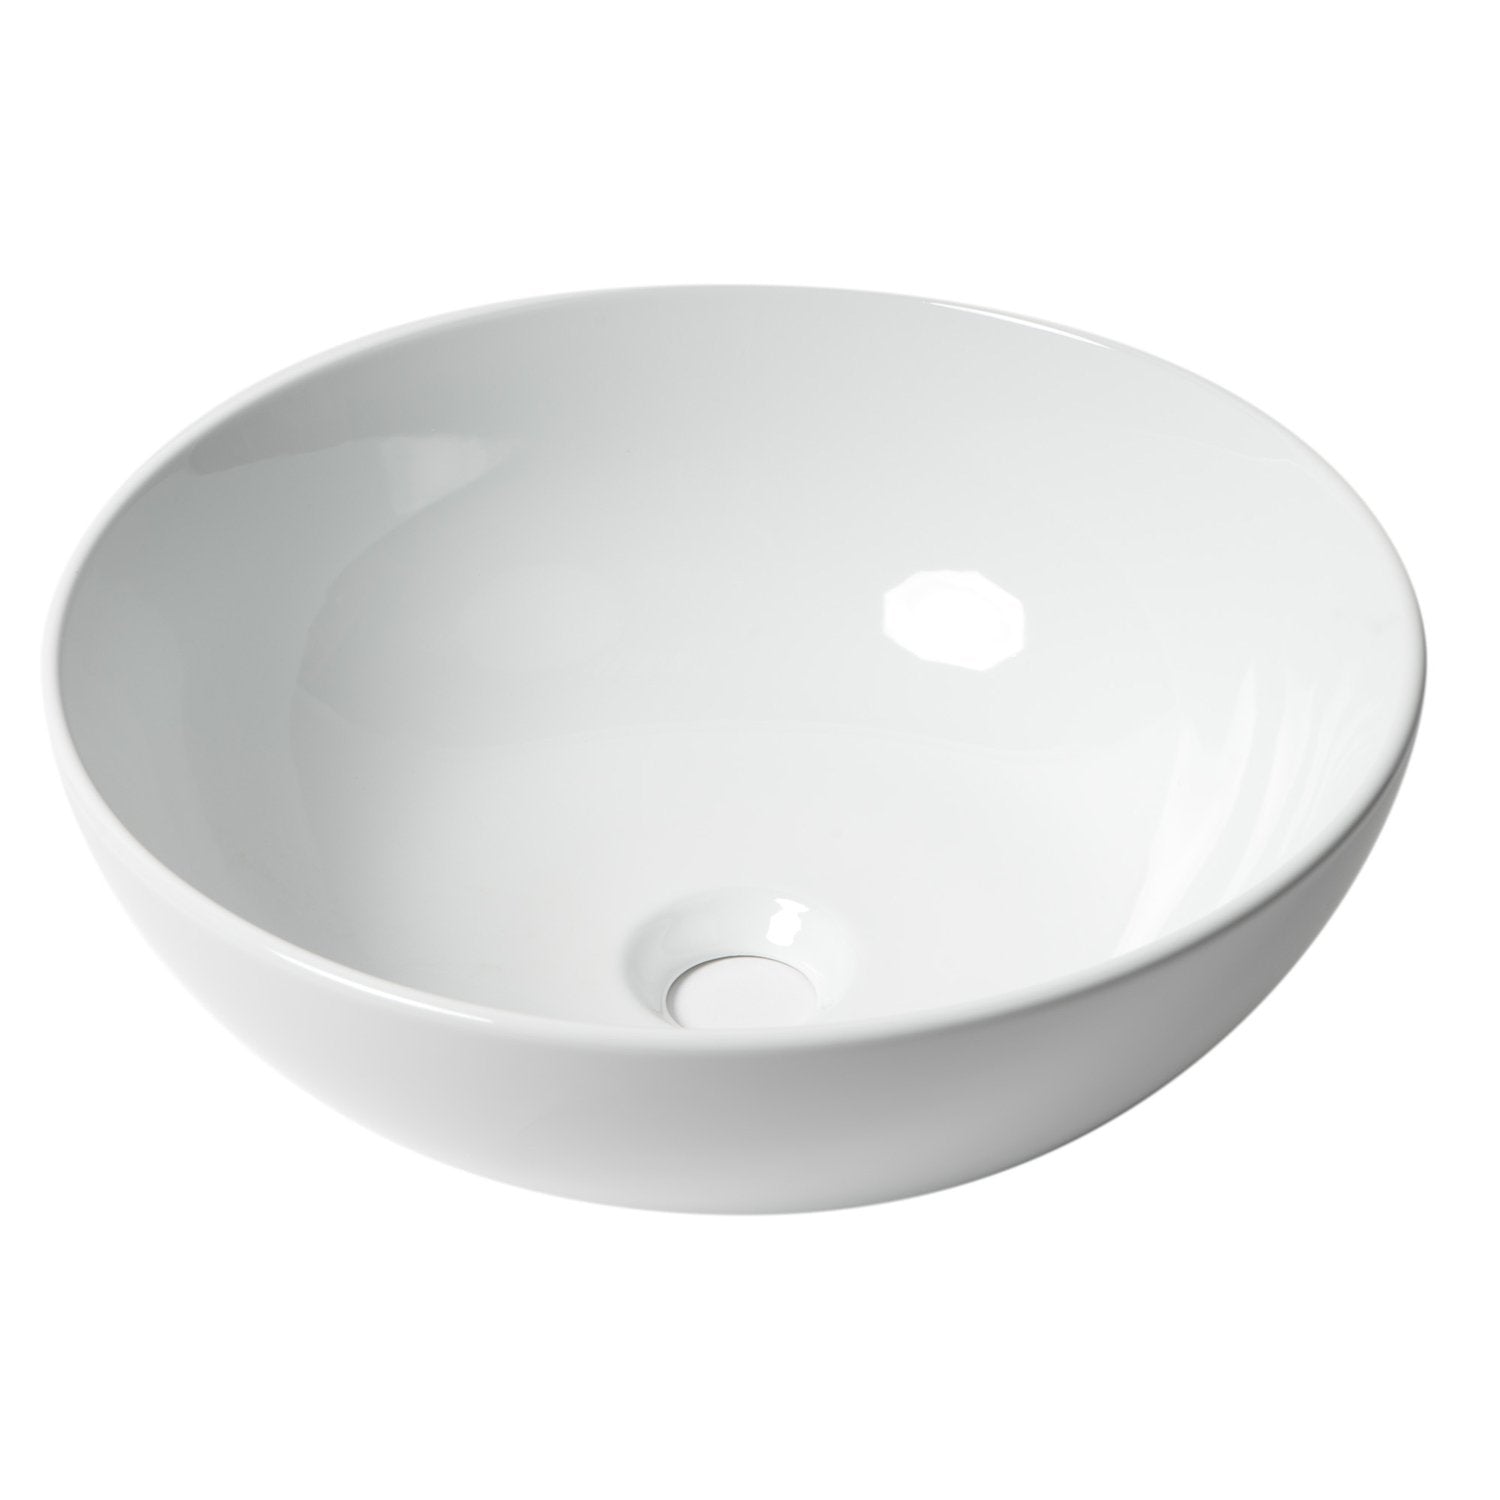 ALFI ABC905 White 15" Round Vessel Bowl Above Mount Ceramic Sink